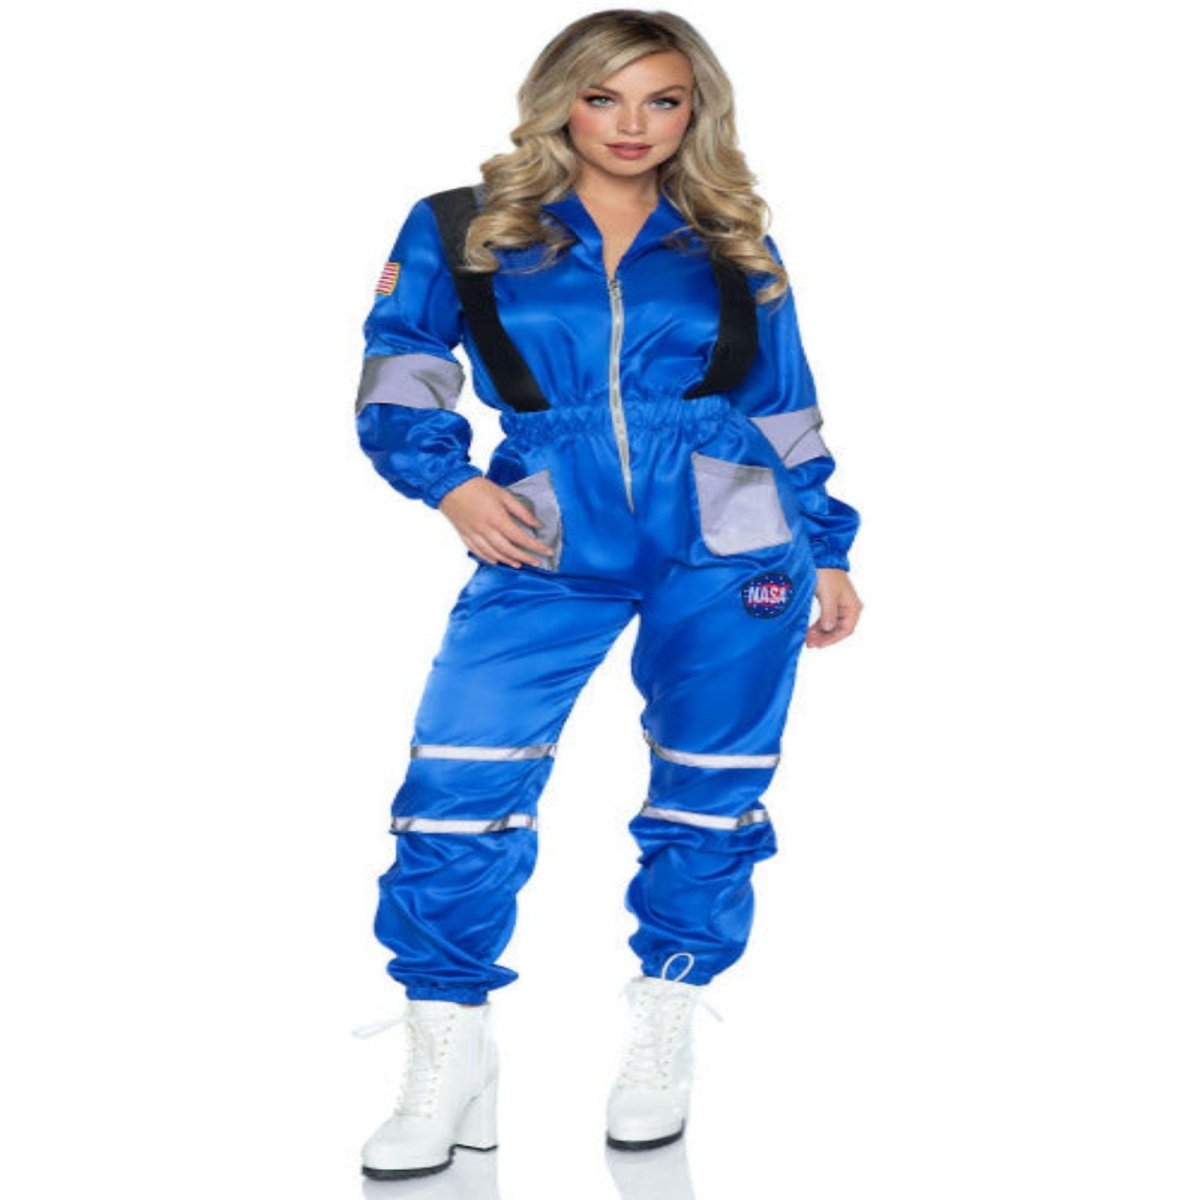 Space Explorer Costume - worldclasscostumes